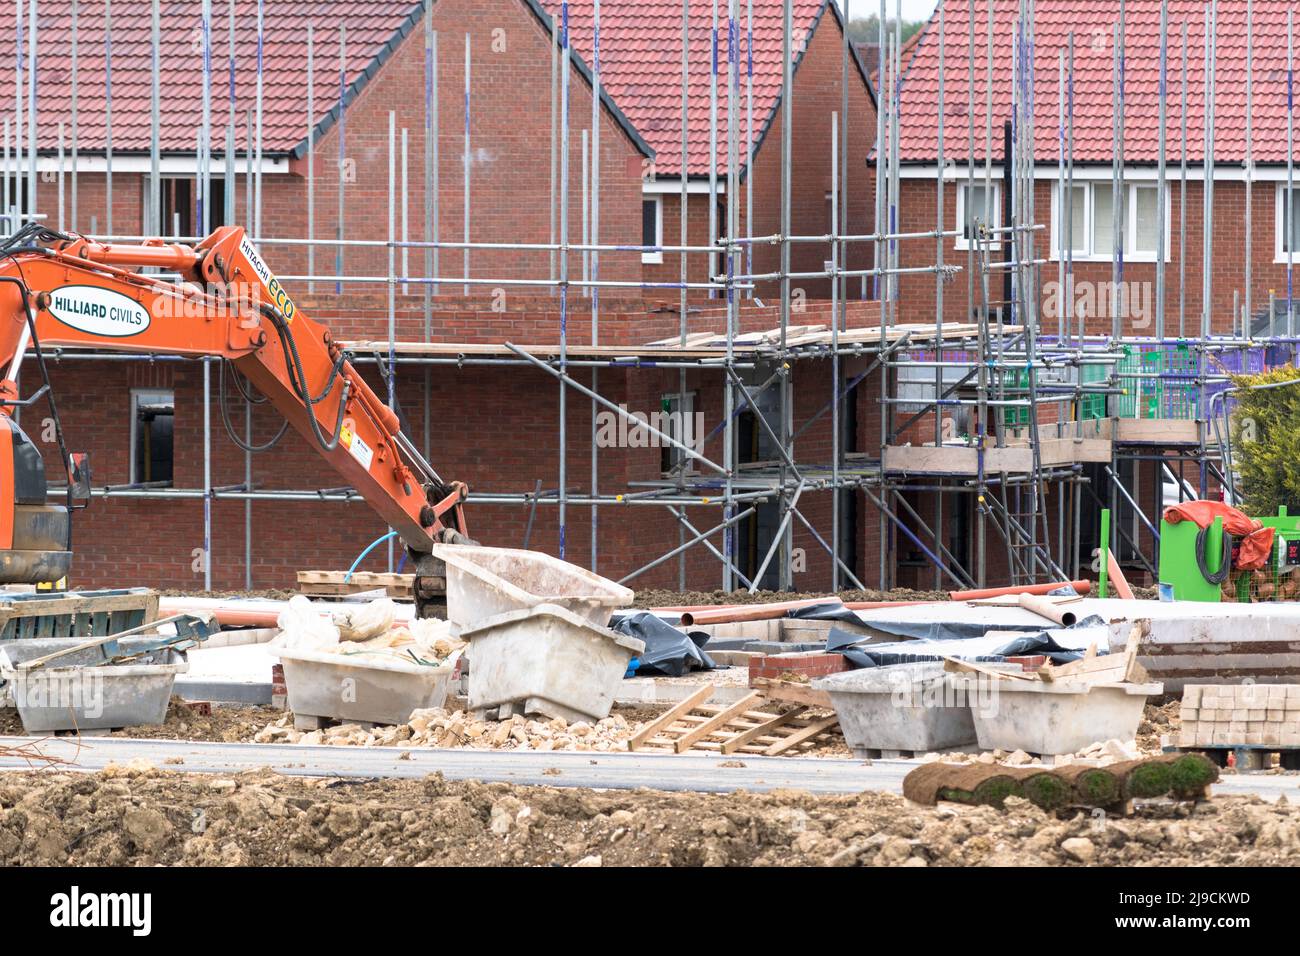 Costruzione - William Thorpe Fields New Homes Housing Development in Holmewood North East Derbyshire Foto Stock